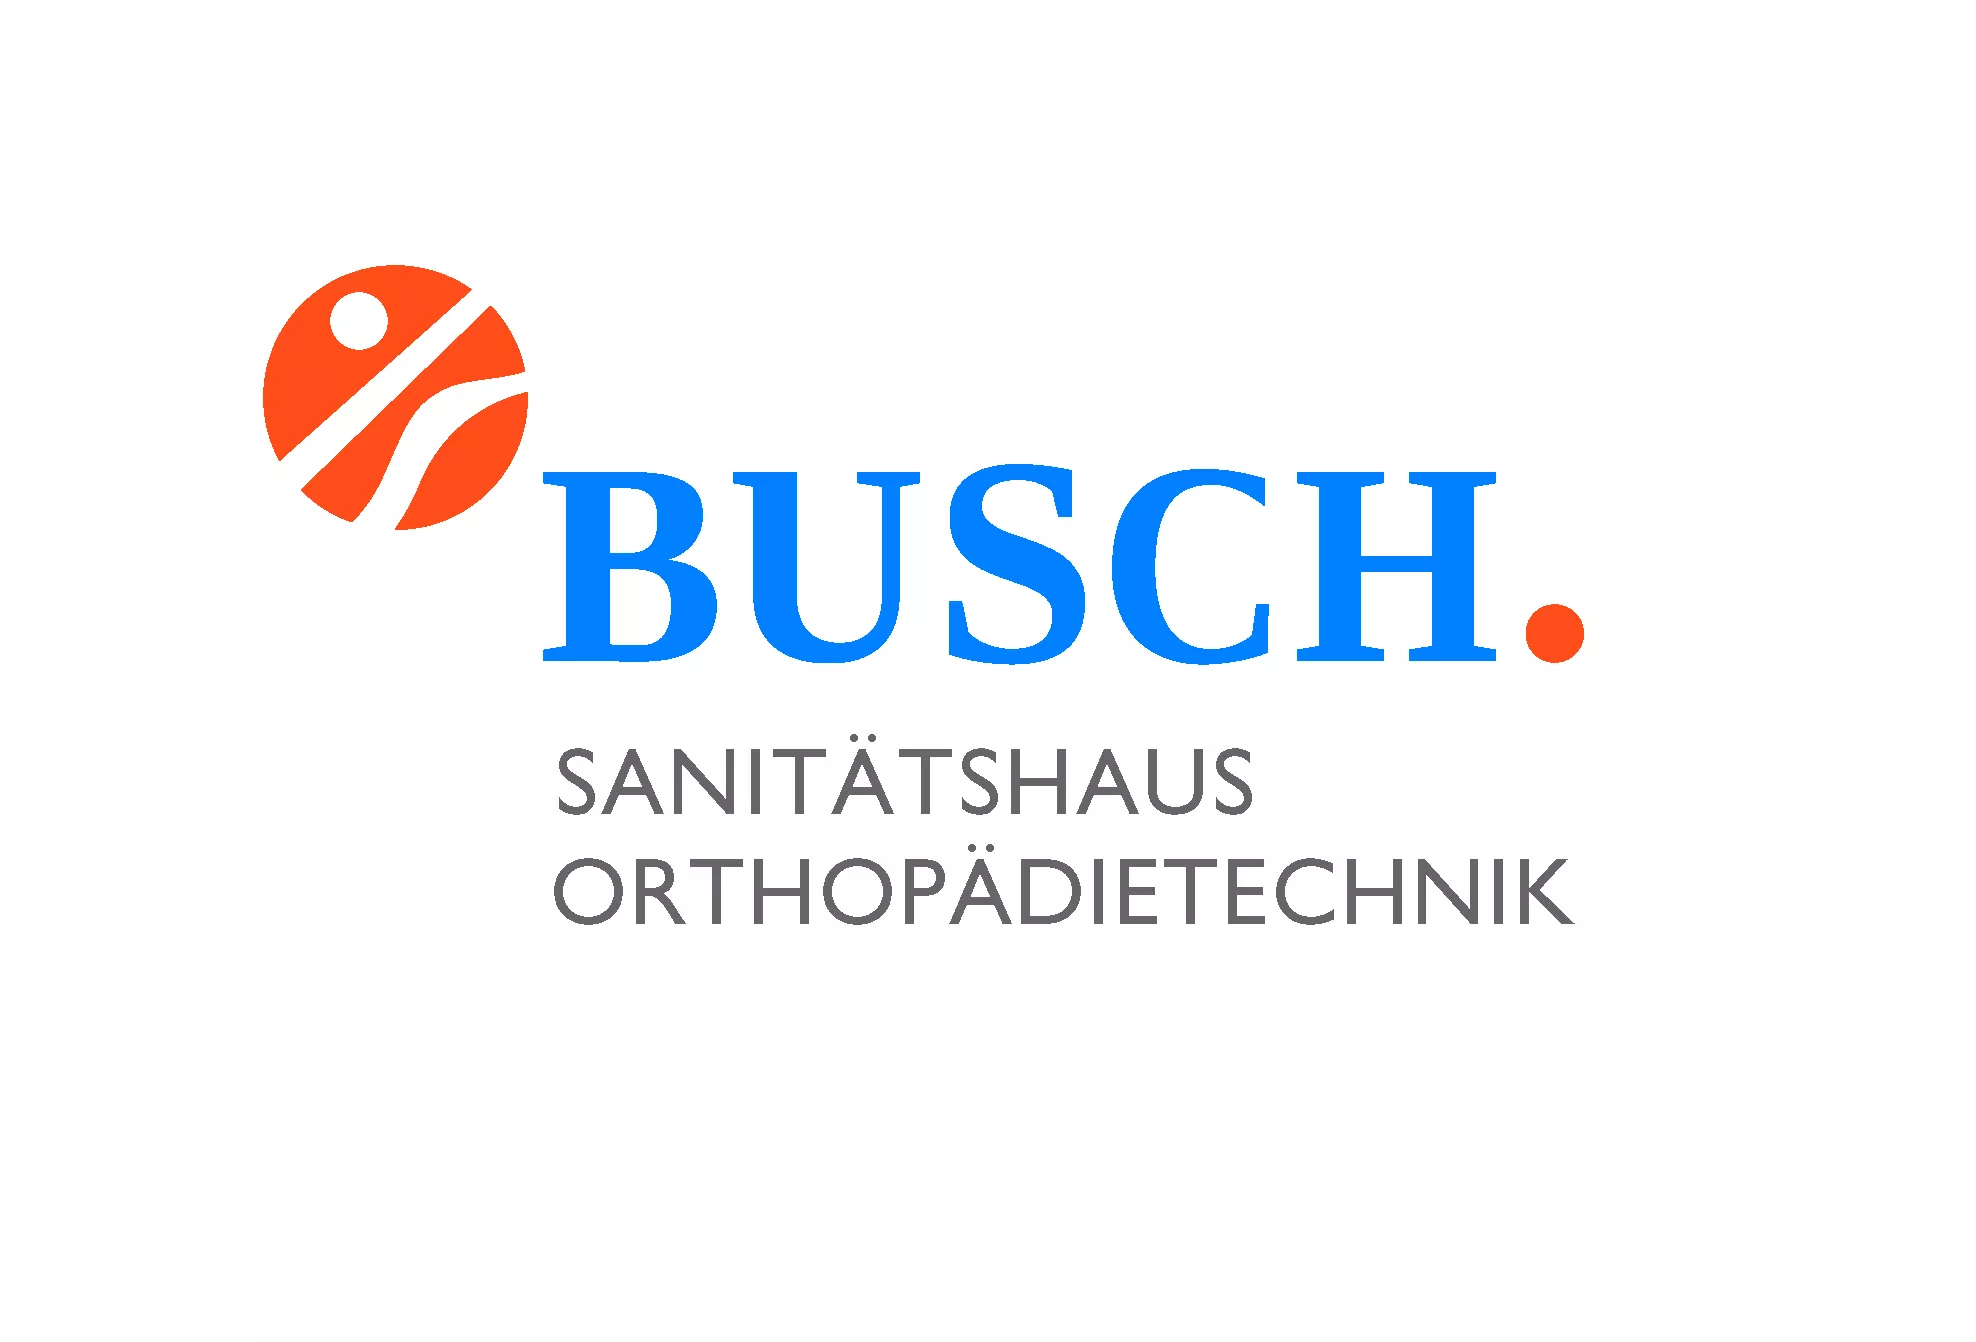 Busch. Sanitätshaus und Orthopädietechnik - Saalebulls Sponsor